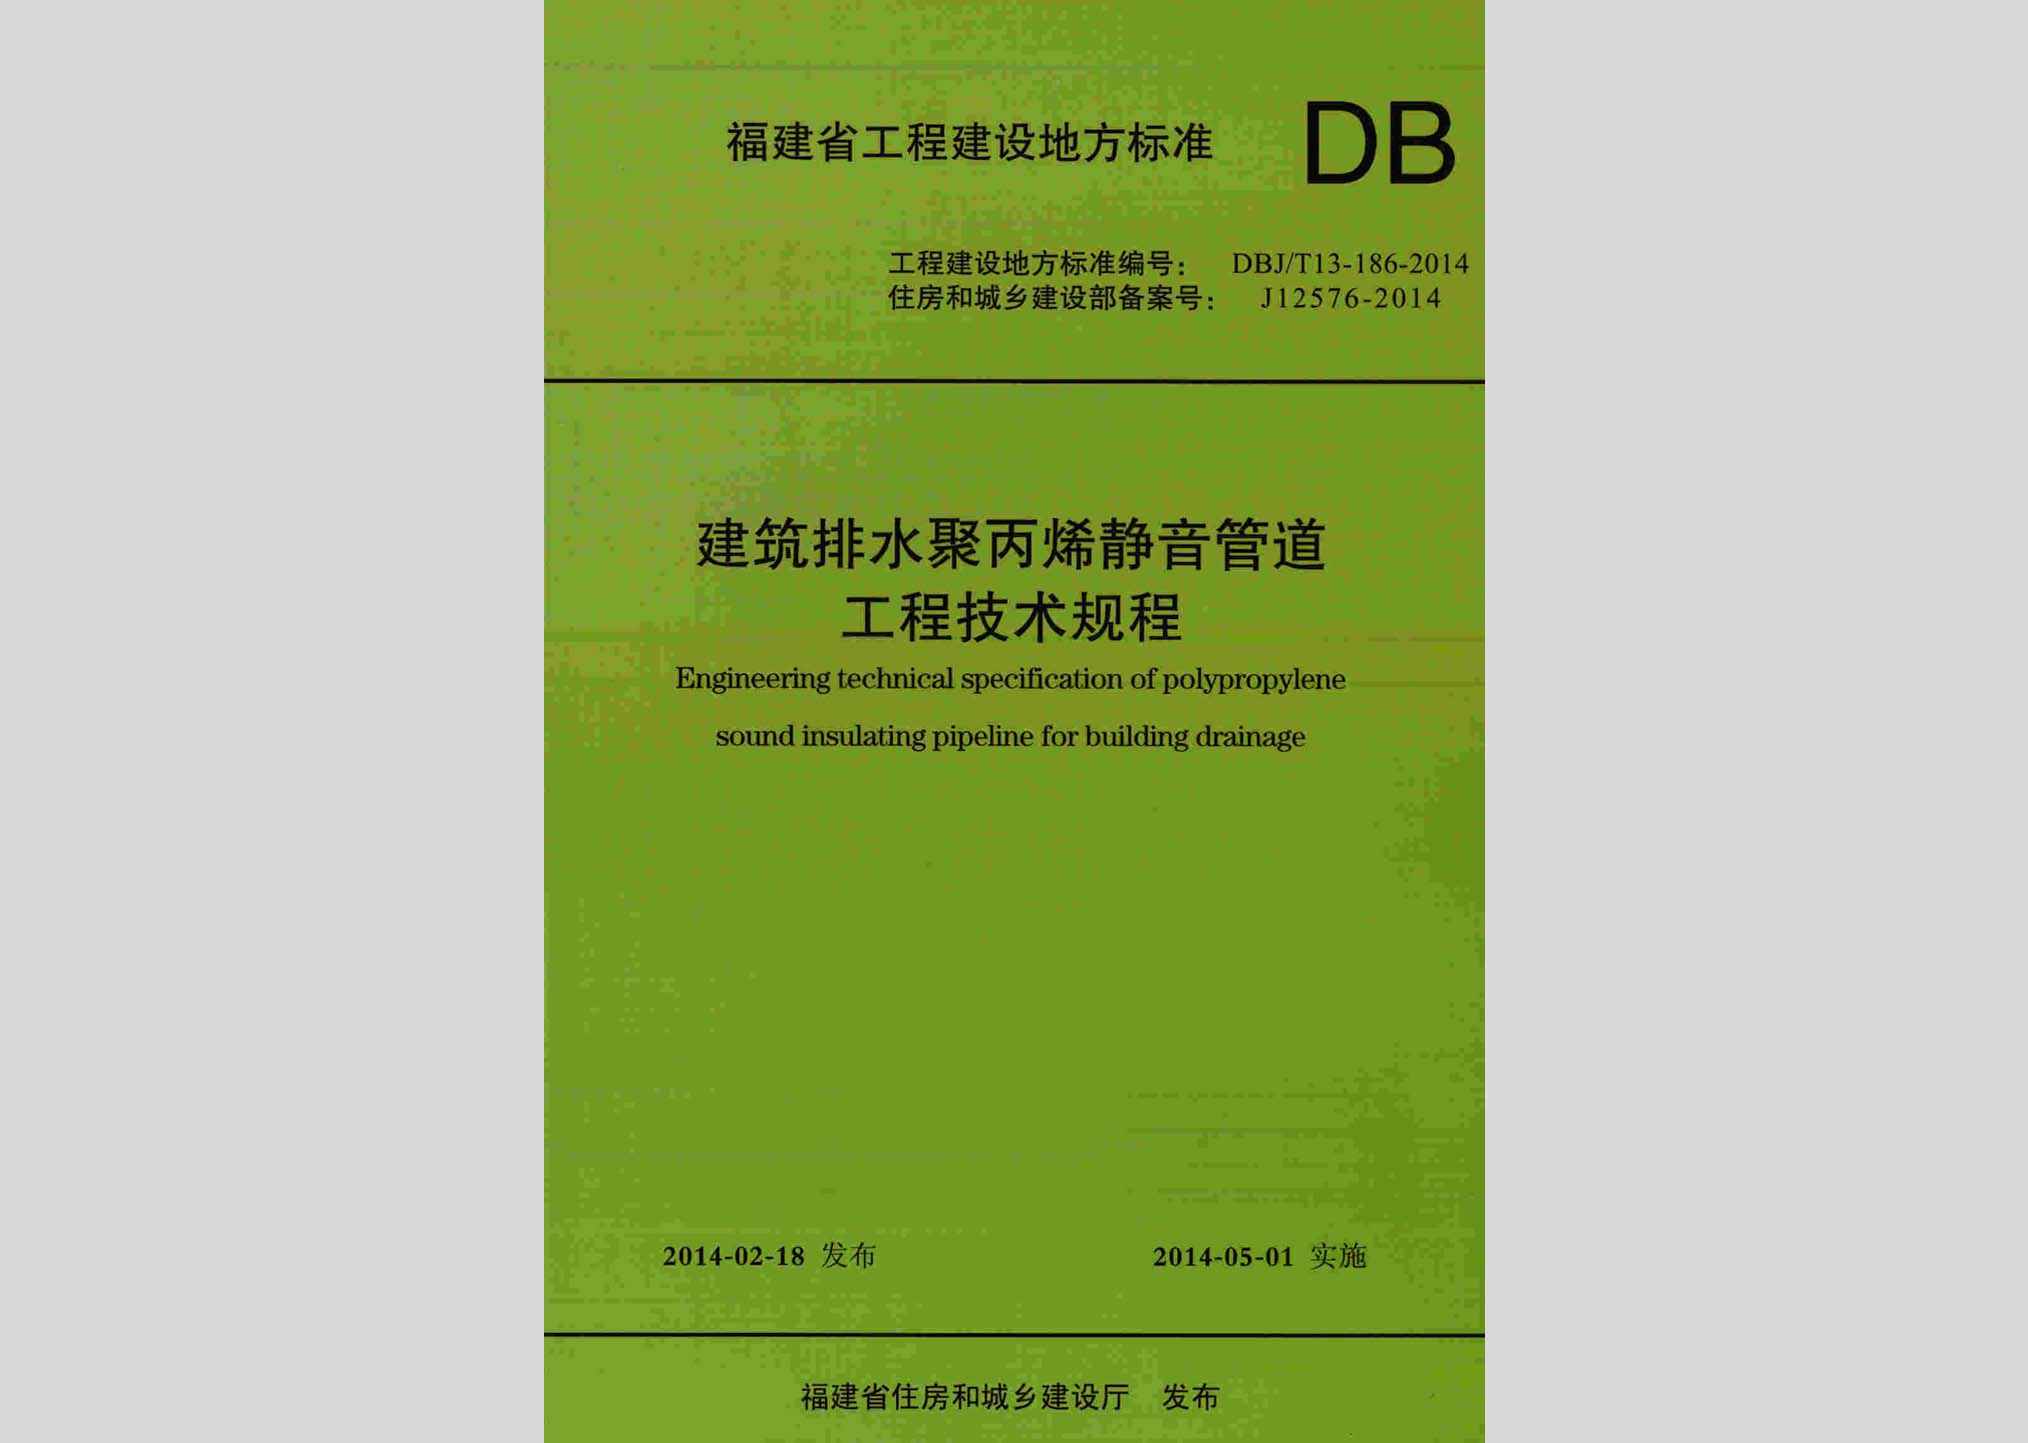 DBJ/T13-186-2014：建筑排水聚丙烯静音管道工程技术规程